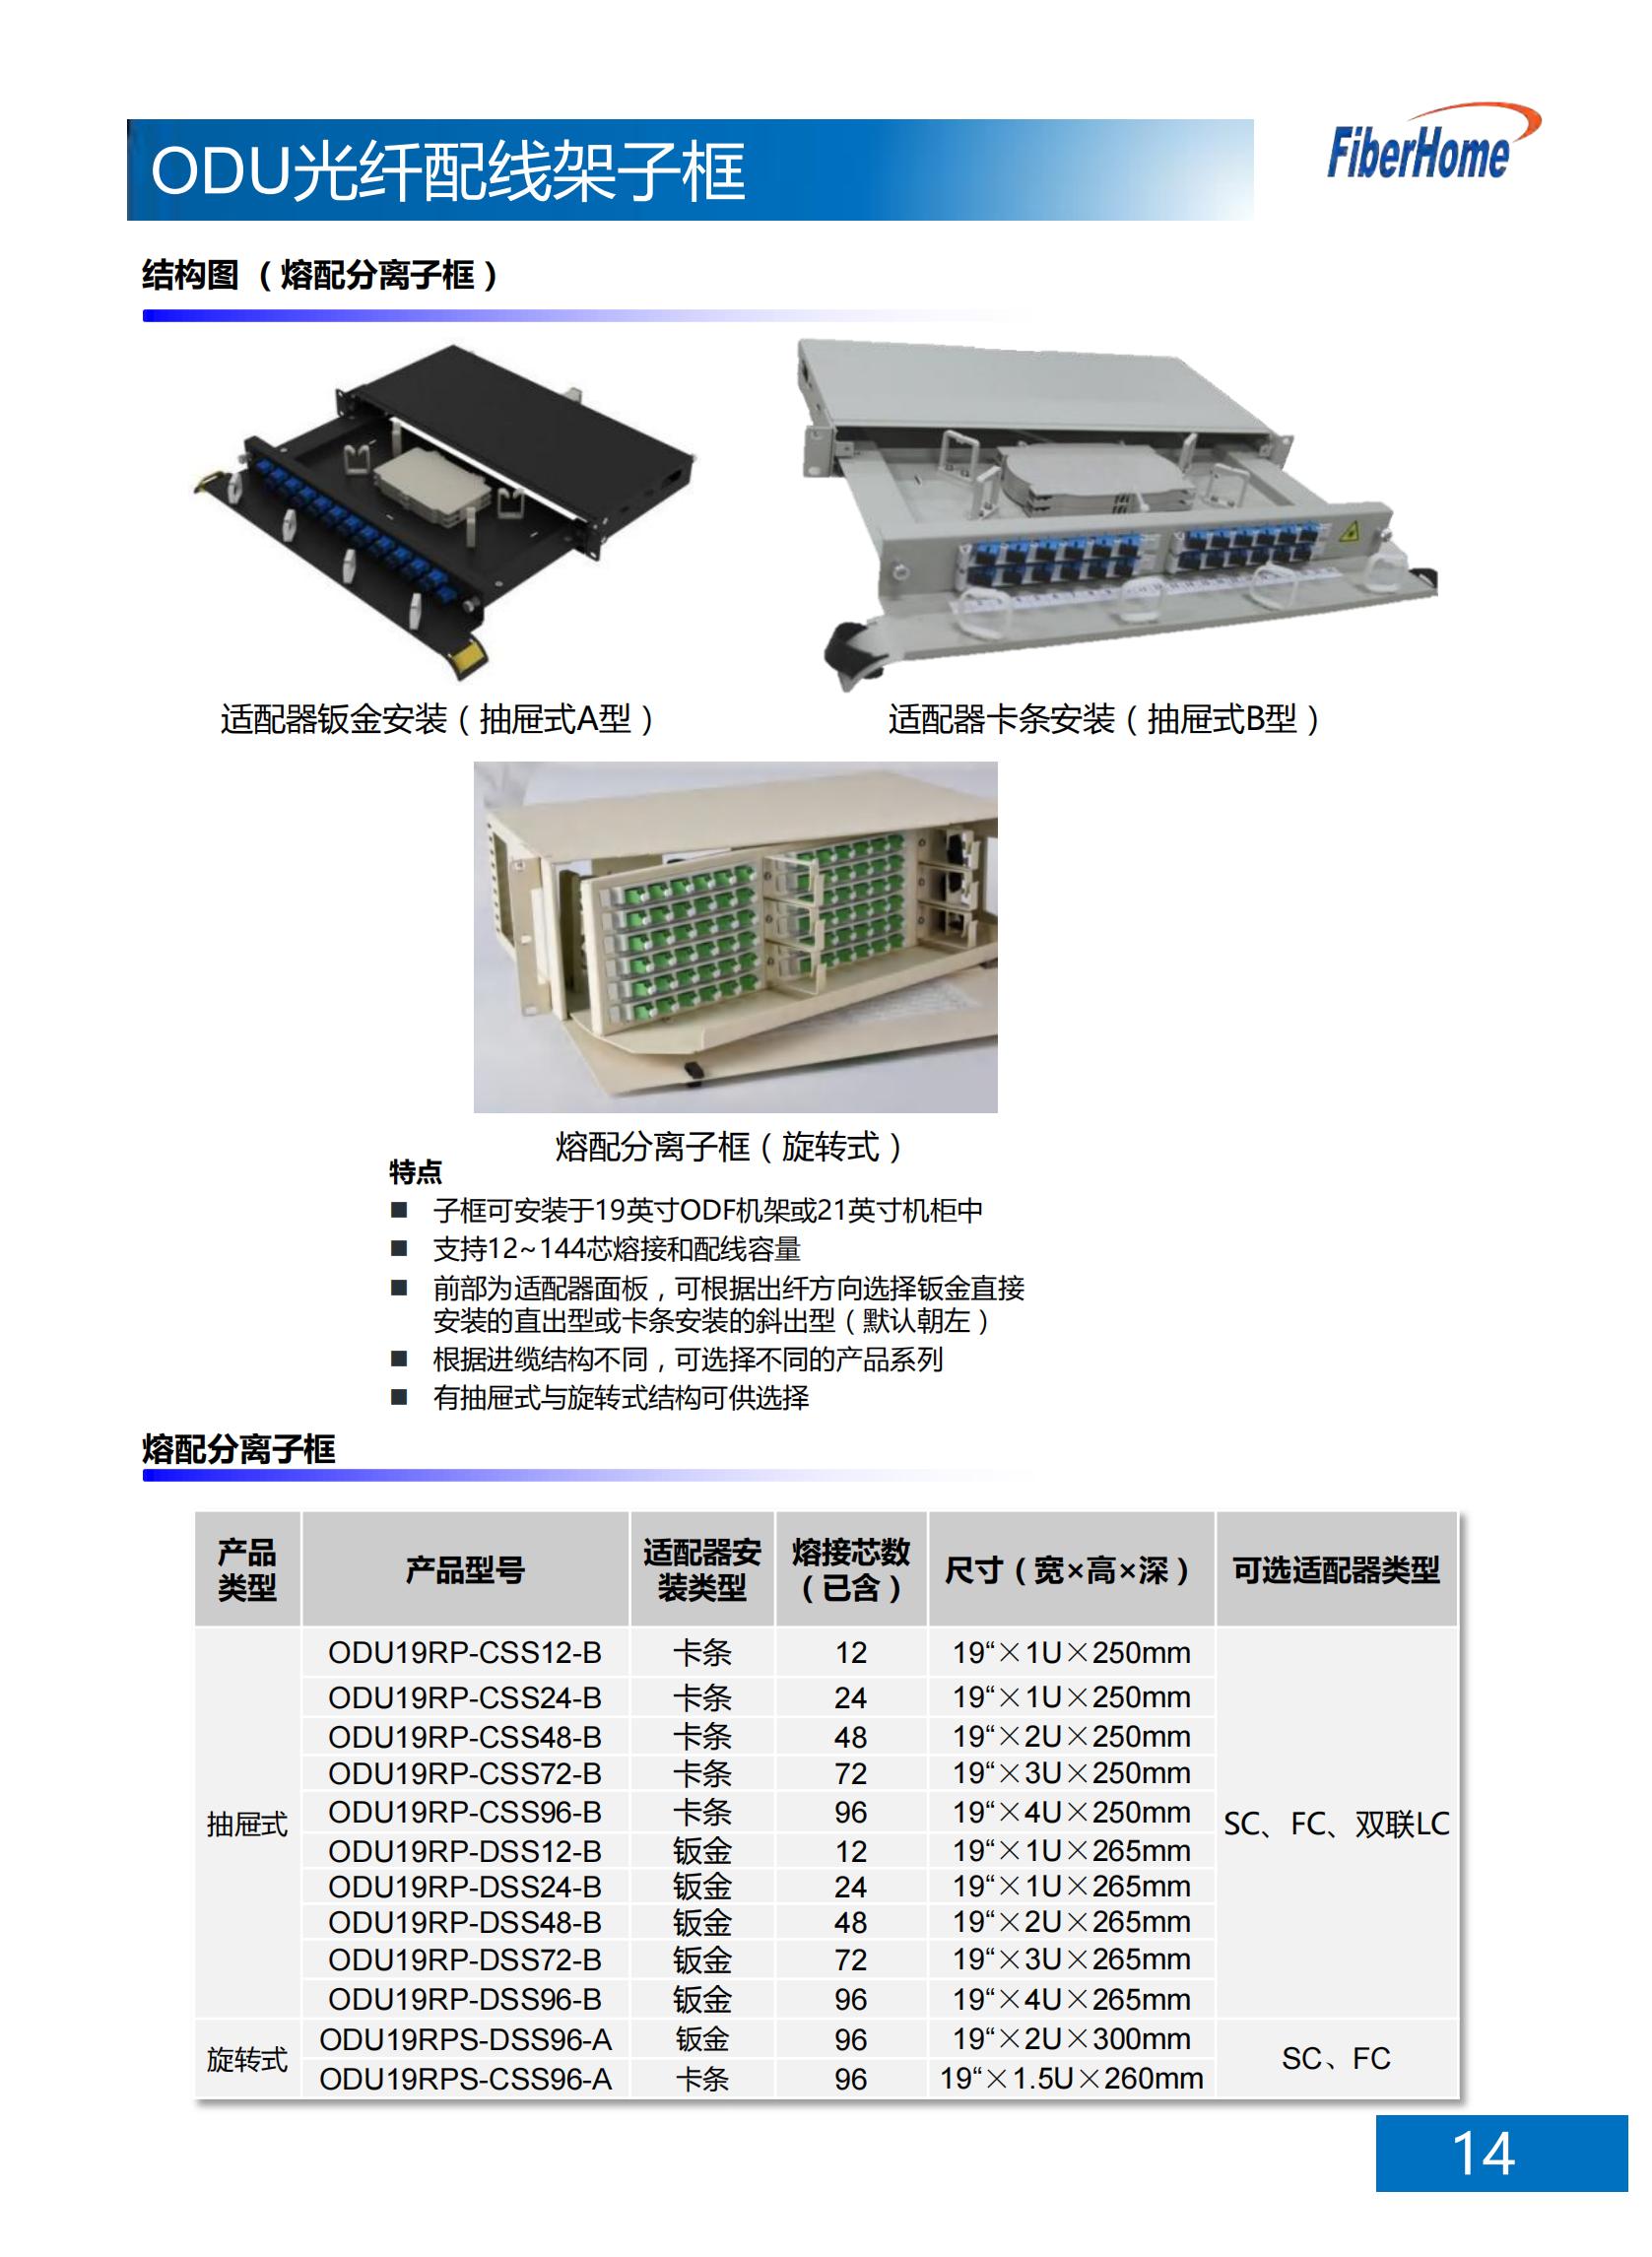 48-core ODU optical fiber distribution shelf frame ODU19T-A48-B-FC (including 12-core FC fusion integration unit*4)